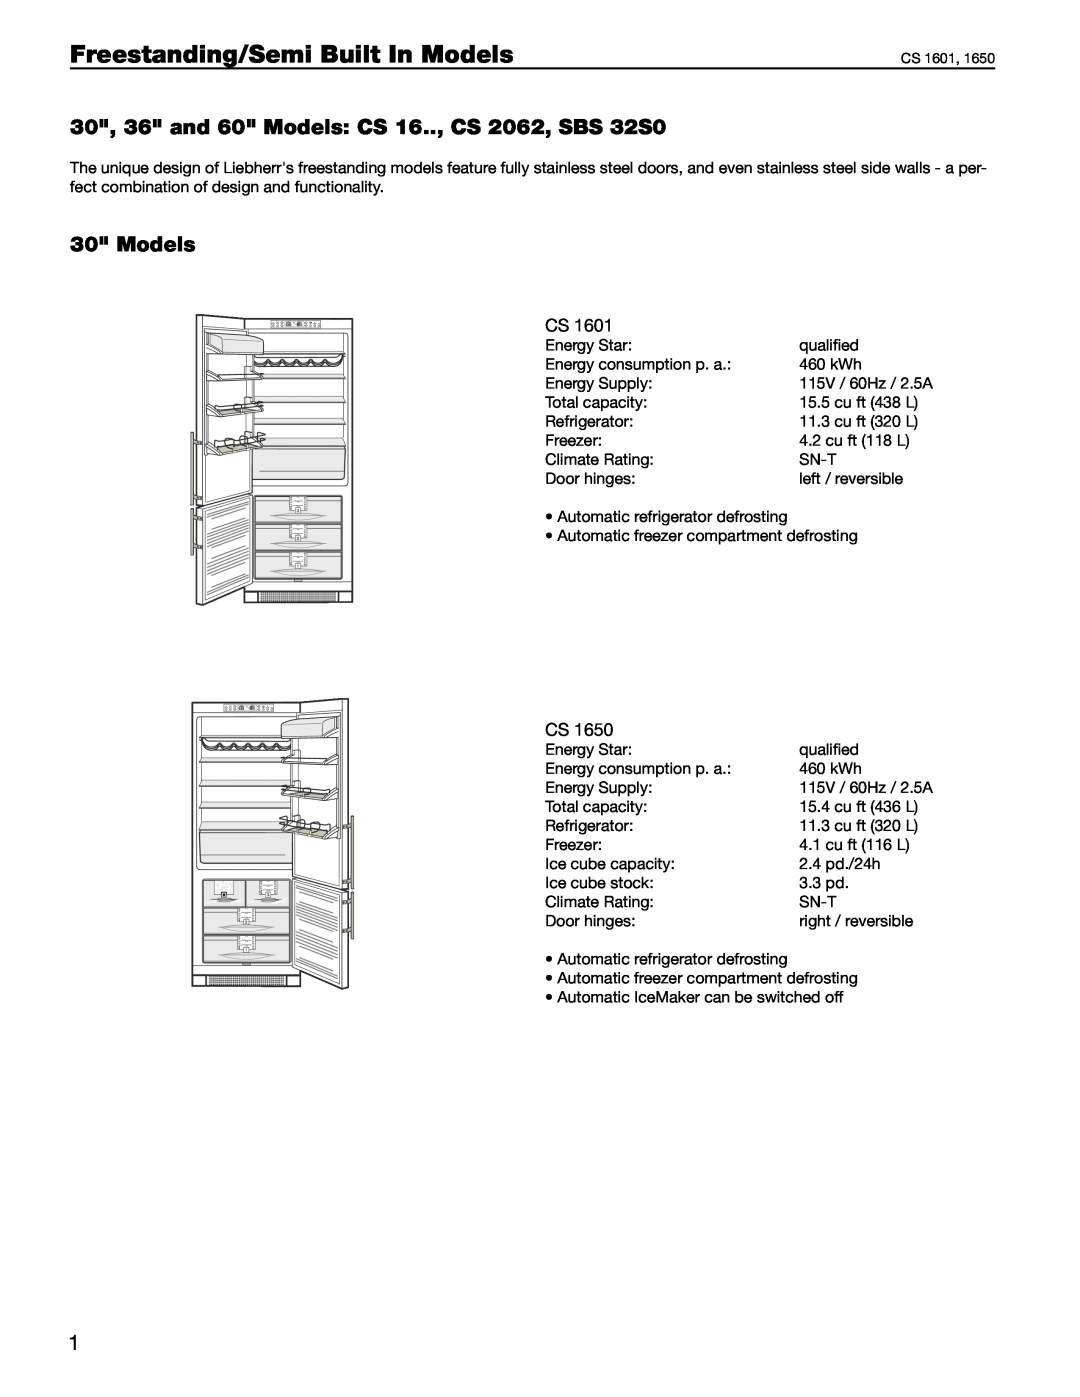 Liebherr manual Freestanding/Semi Built In Models, 30, 36 and 60 Models CS 16.., CS 2062, SBS 32S0 